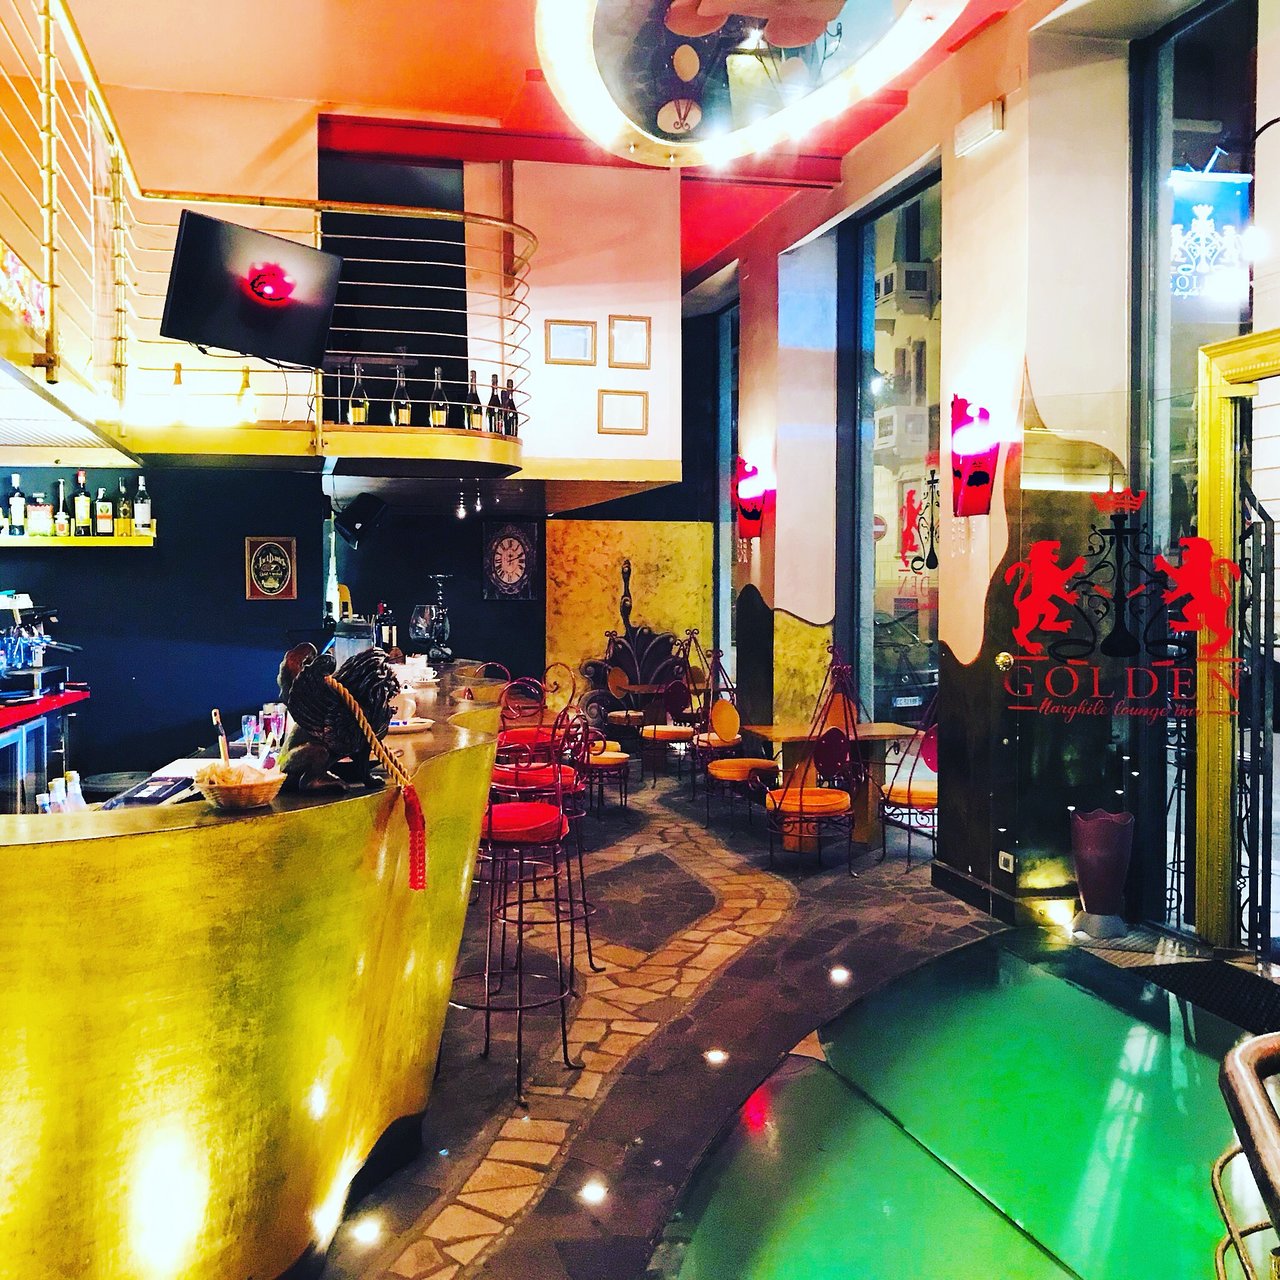 Golden Lounge Bar, Torino